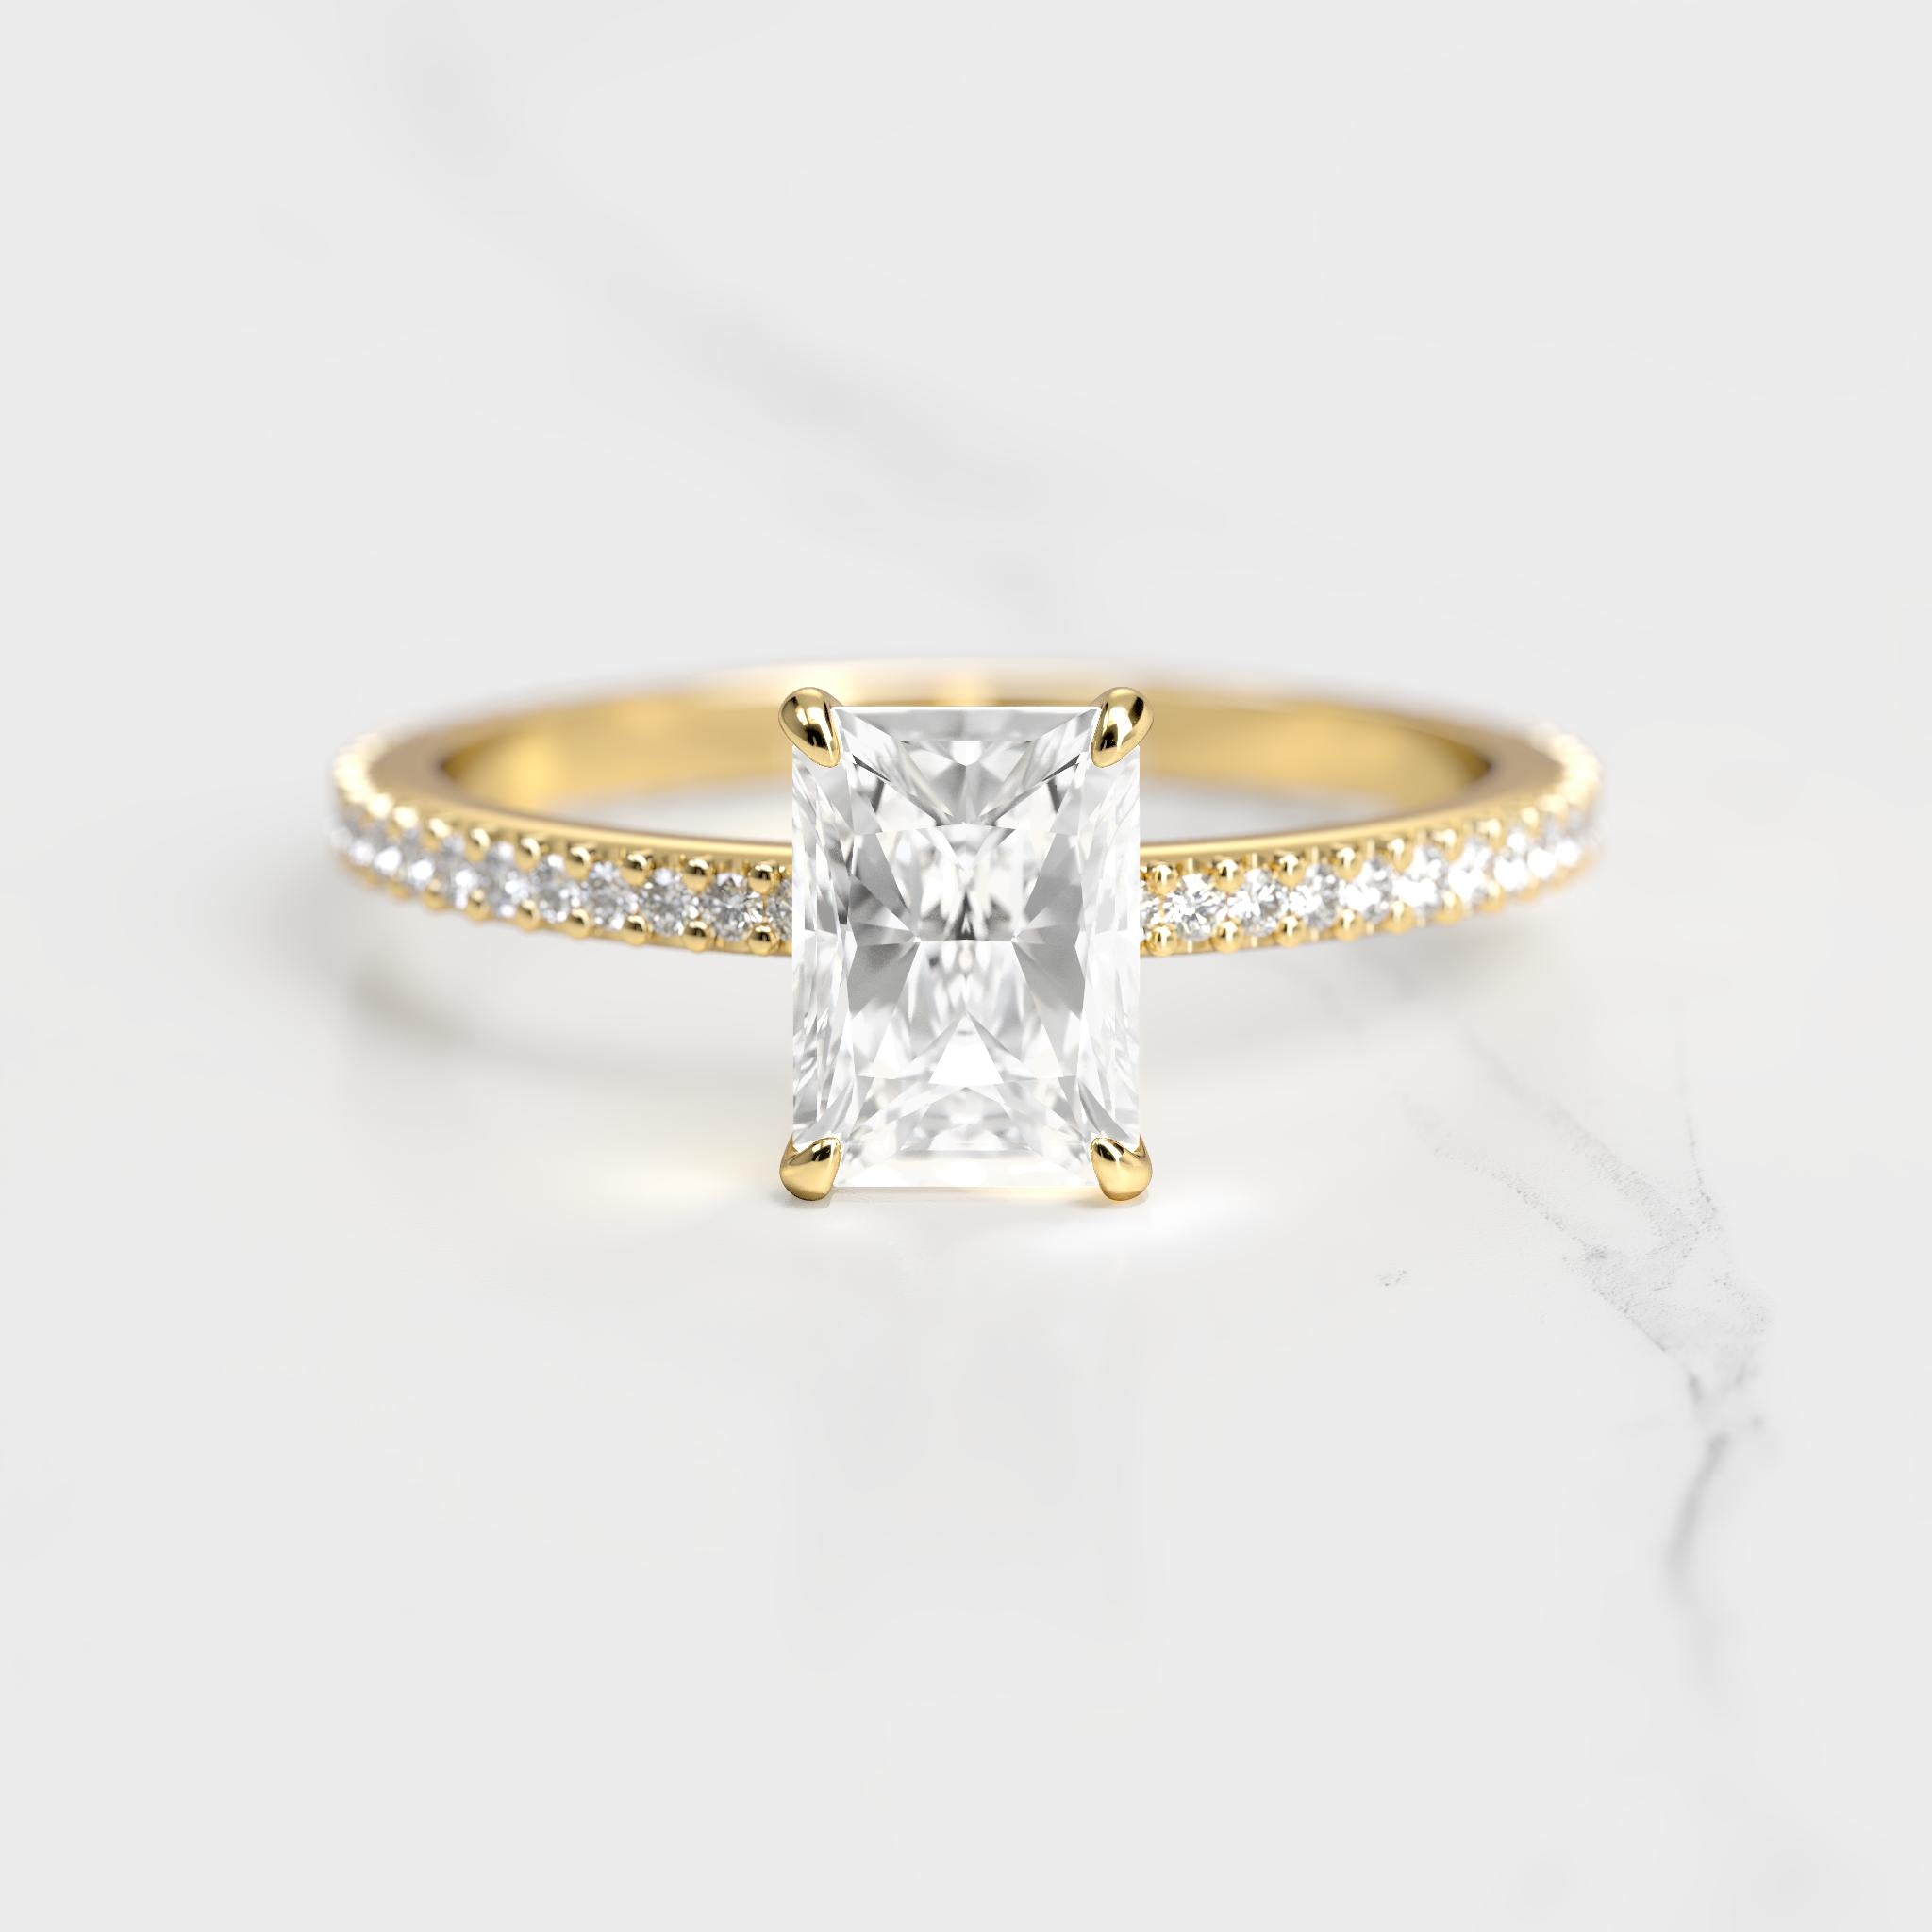 Radiant Half Pave Tapered Diamond Ring - 14k rose gold / 1ct / lab diamond